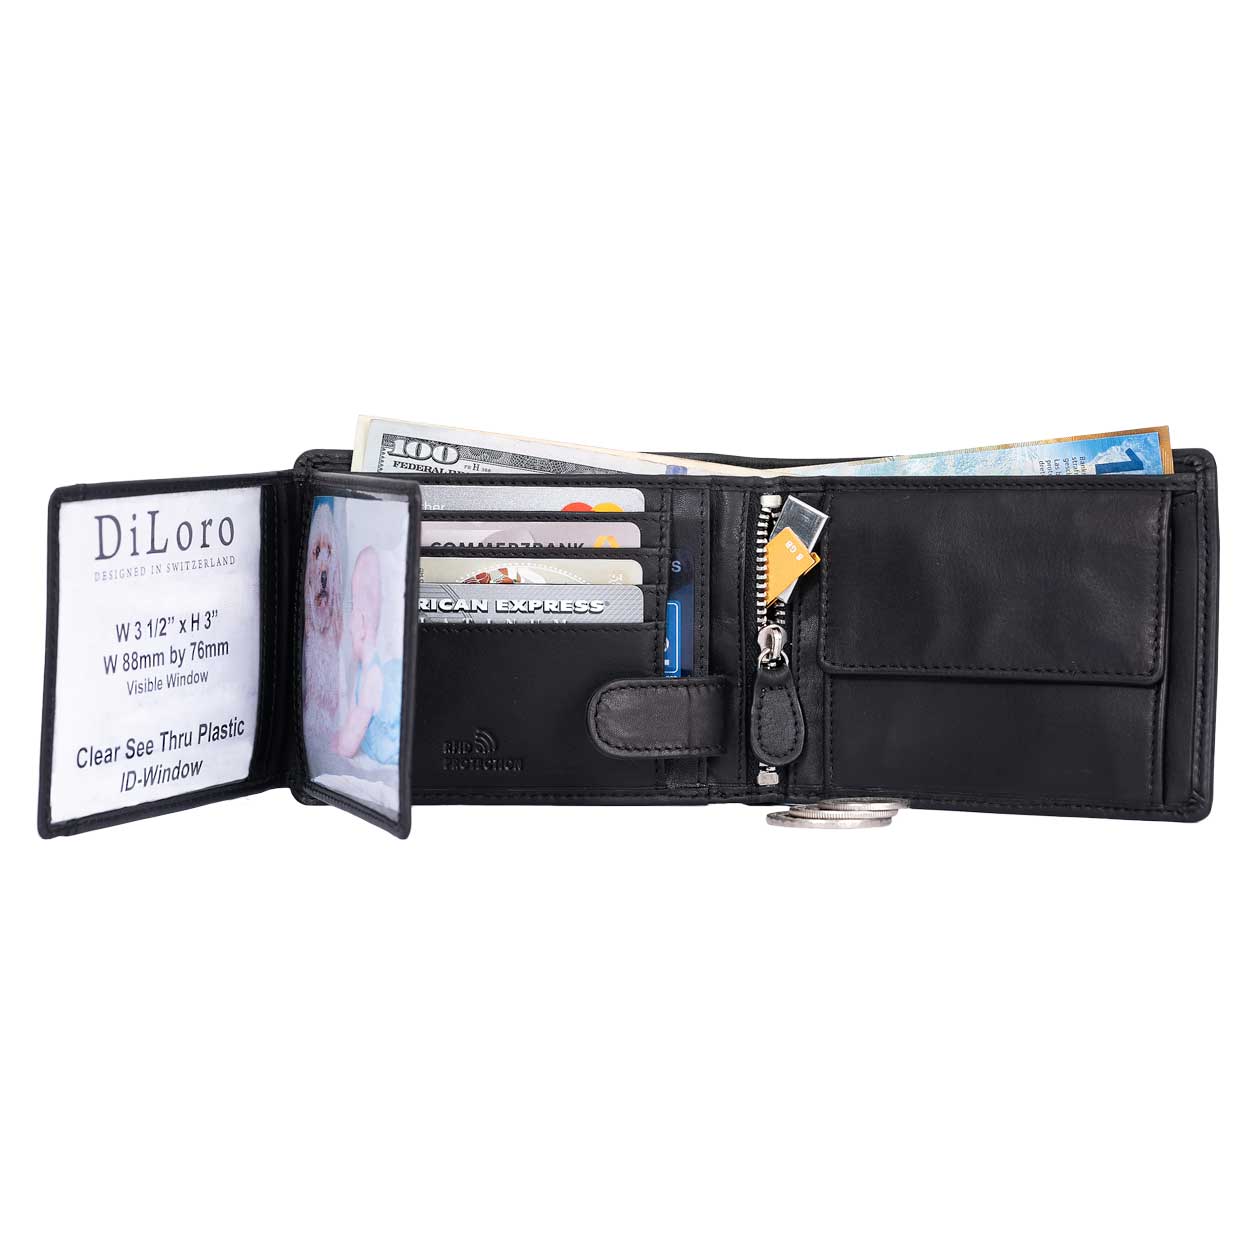 Access Denied Genuine Leather Slim Wallets for Men - Bifold Mens Wallets RFID Blocking with Flip Up ID Window, Black